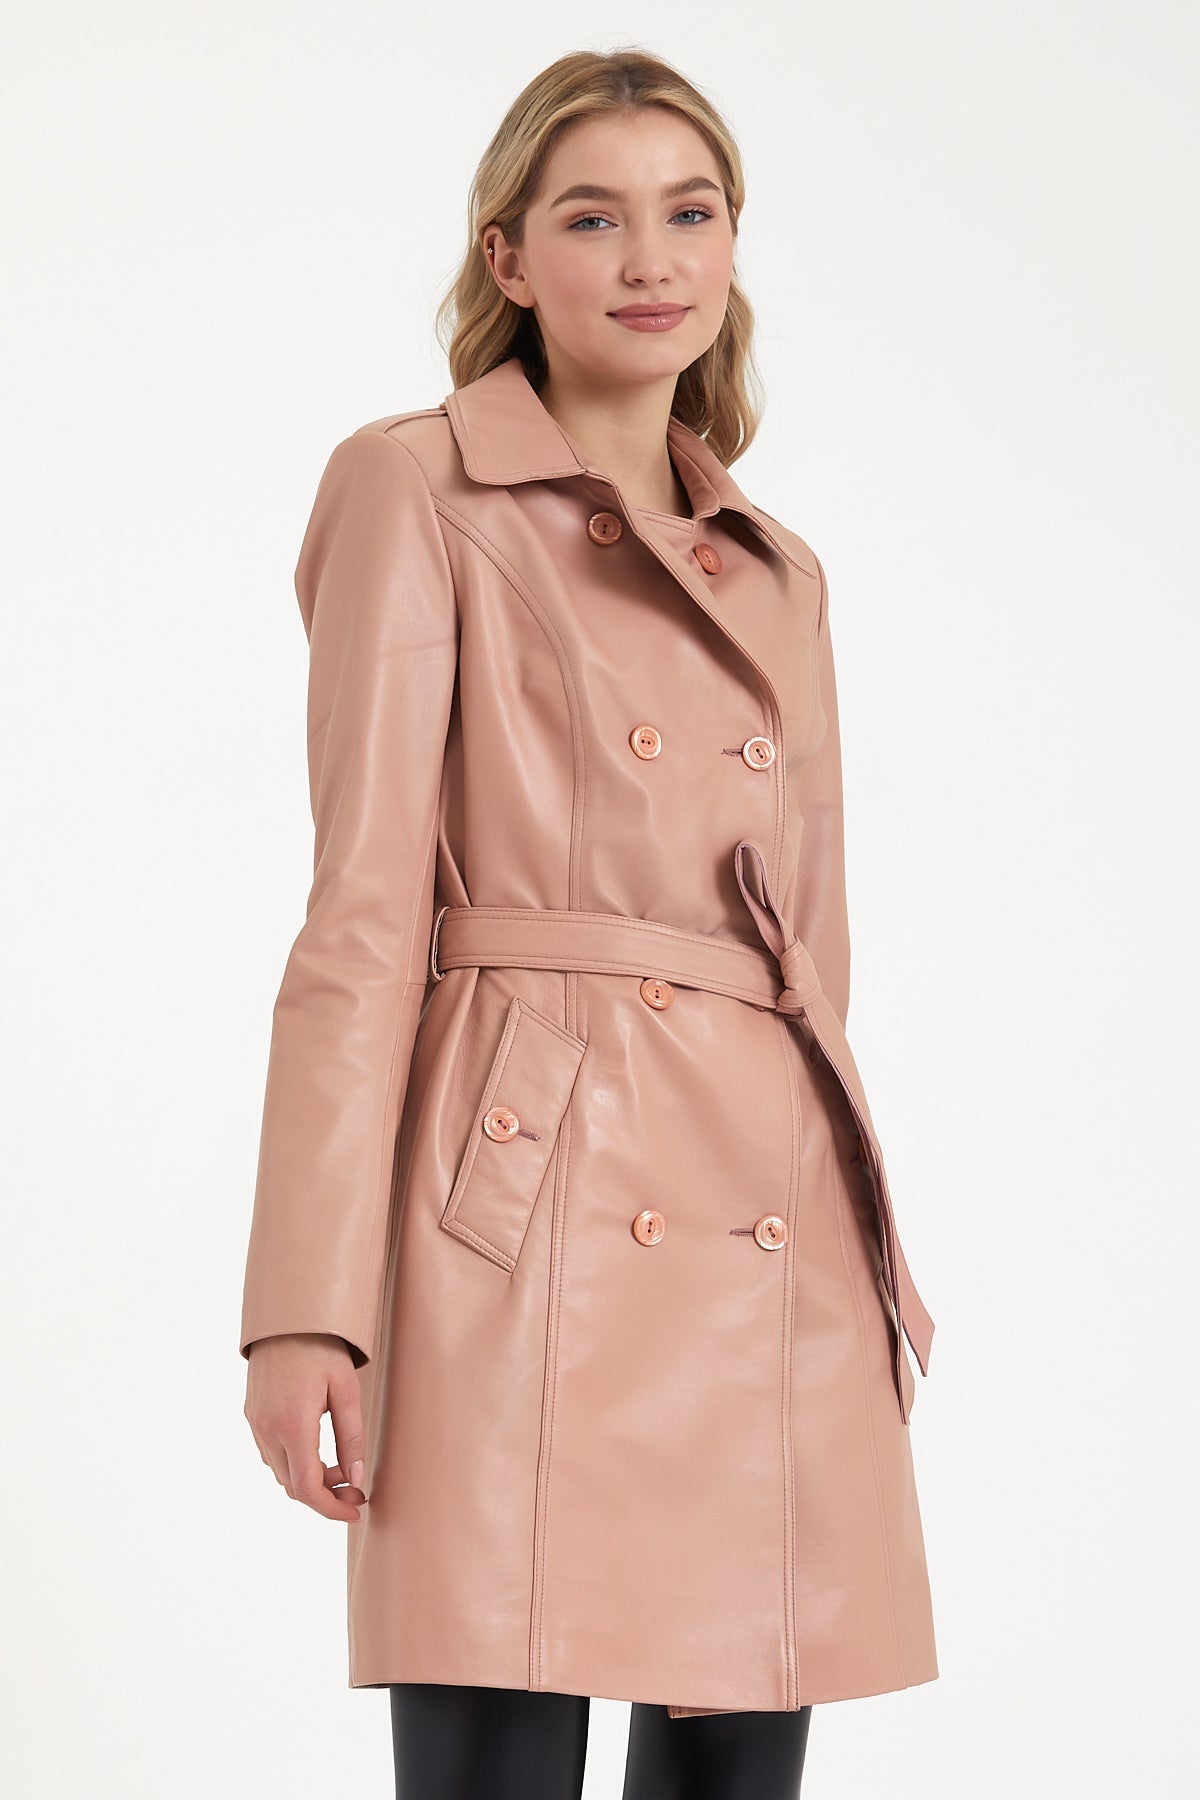 Women's leather trench coat